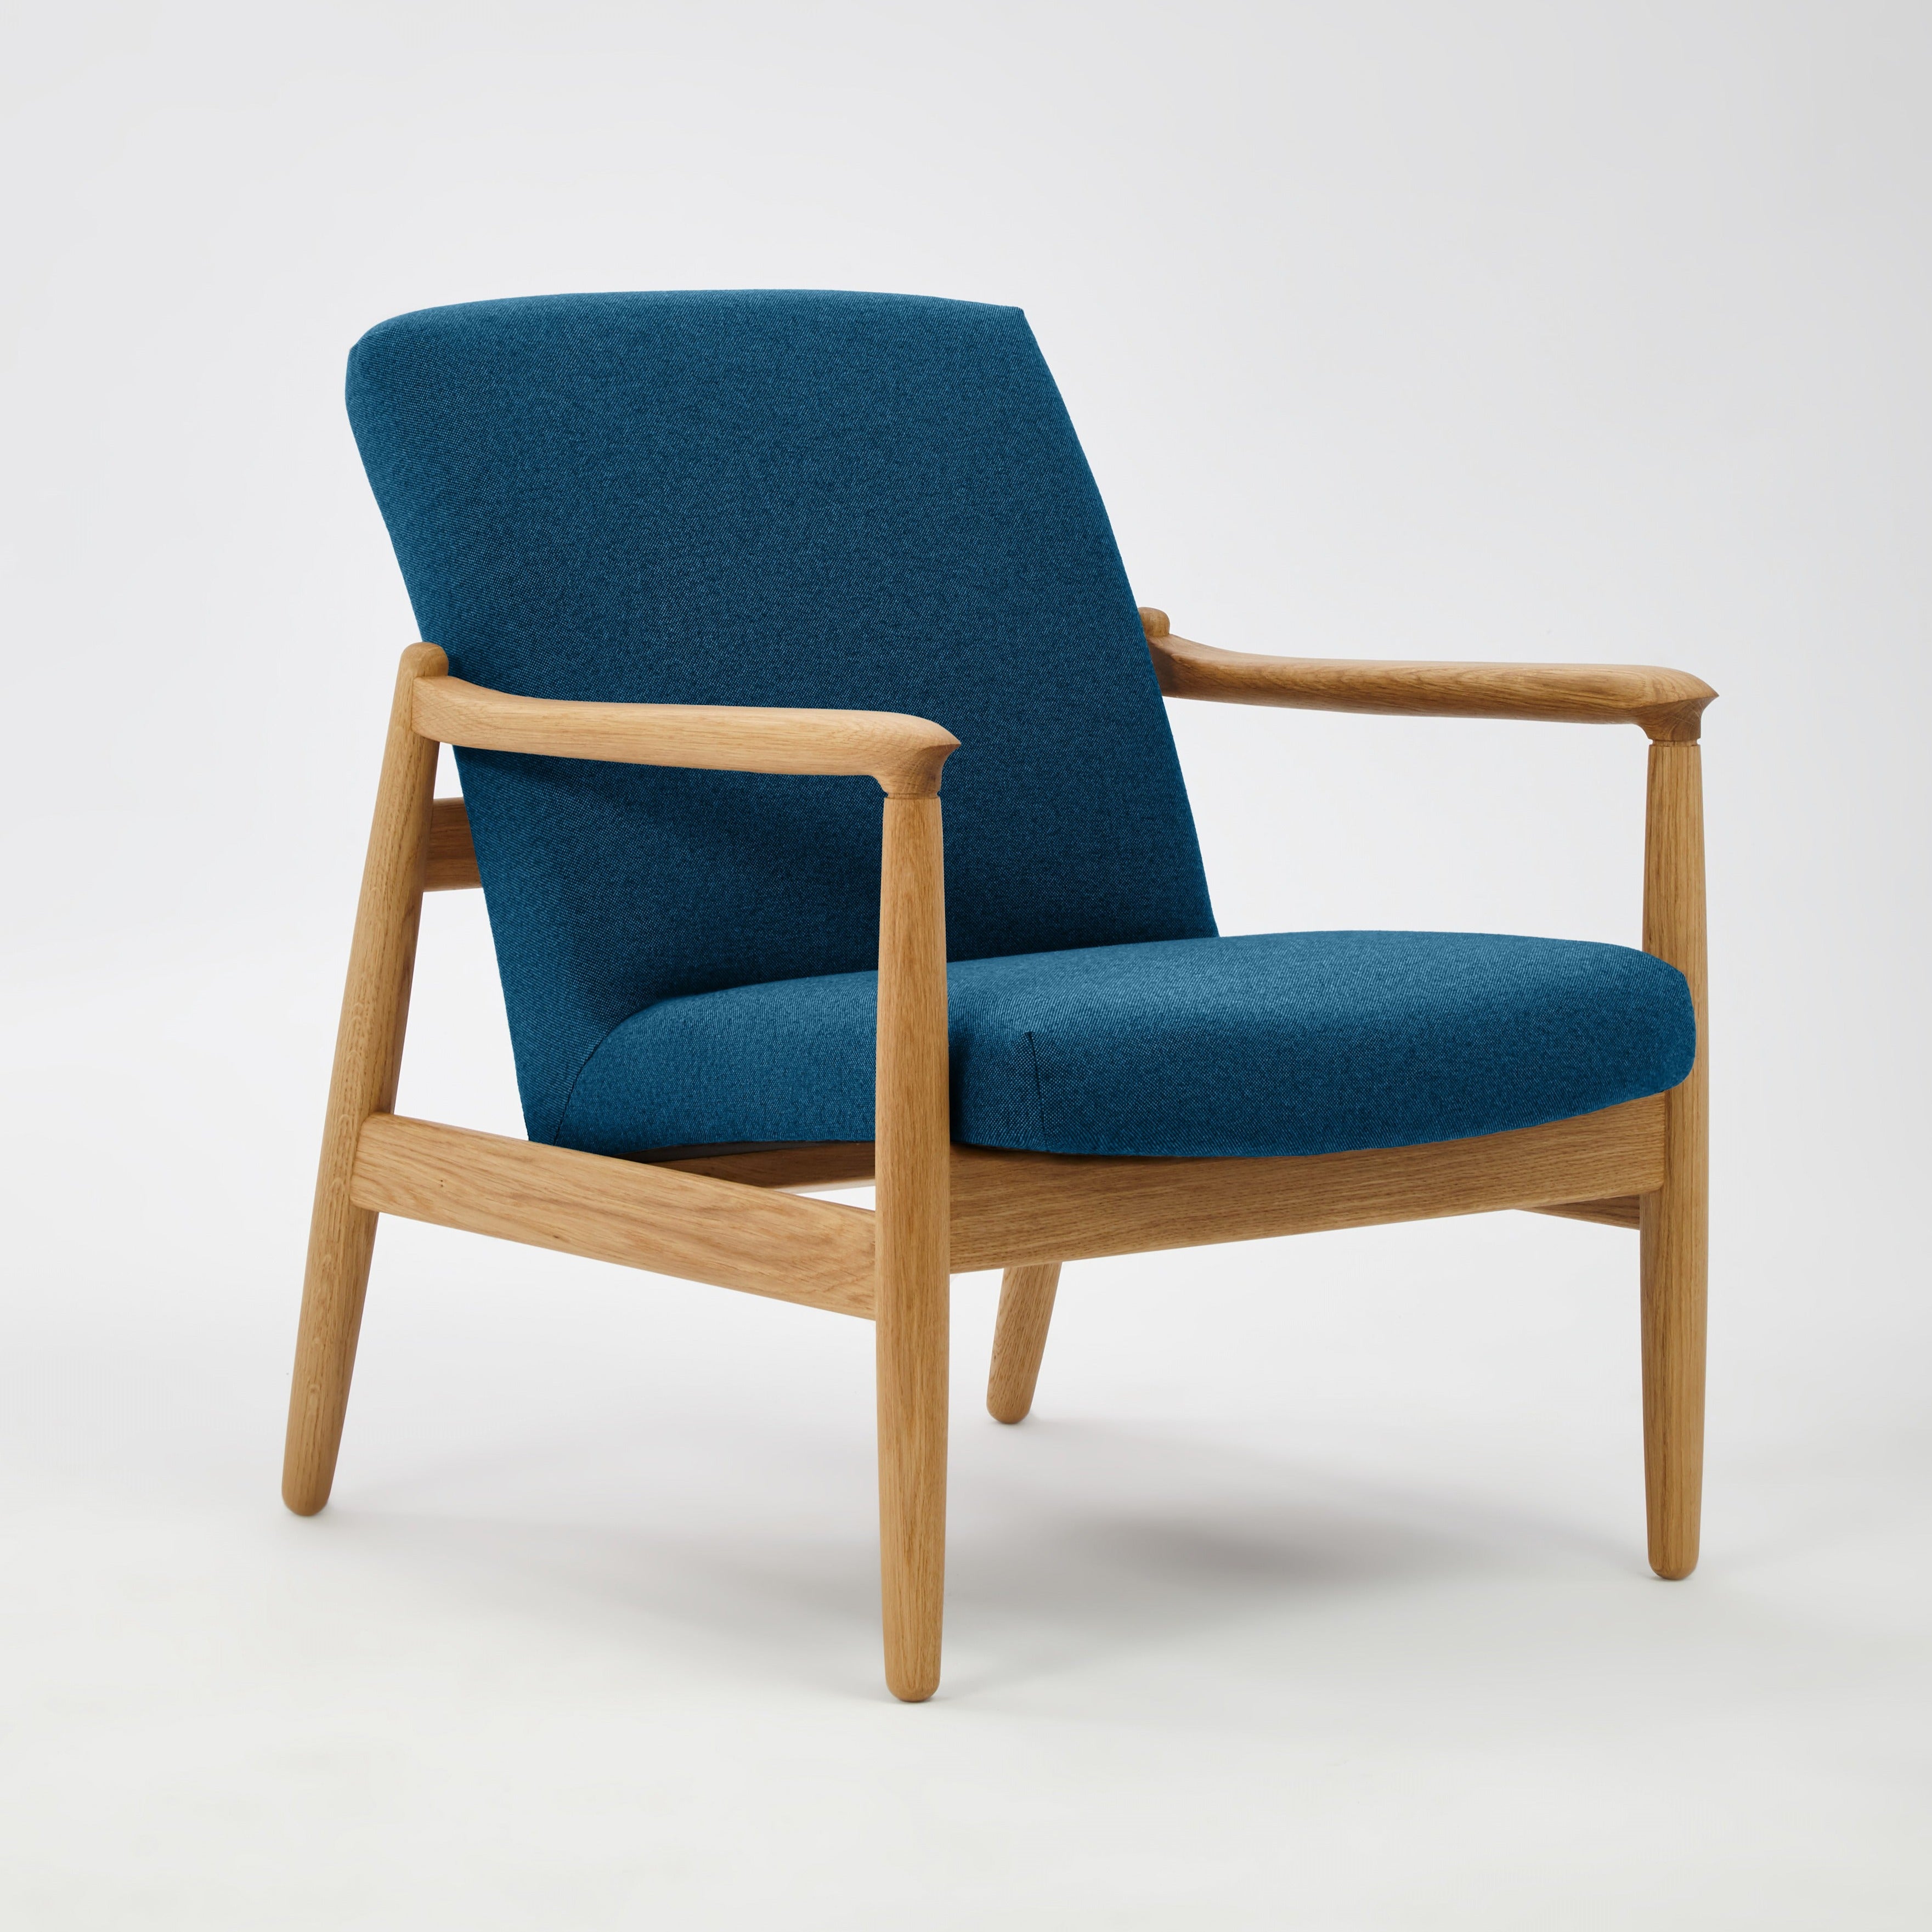 H 64 Lowback Chair white finish oak frame upholstery colour blue